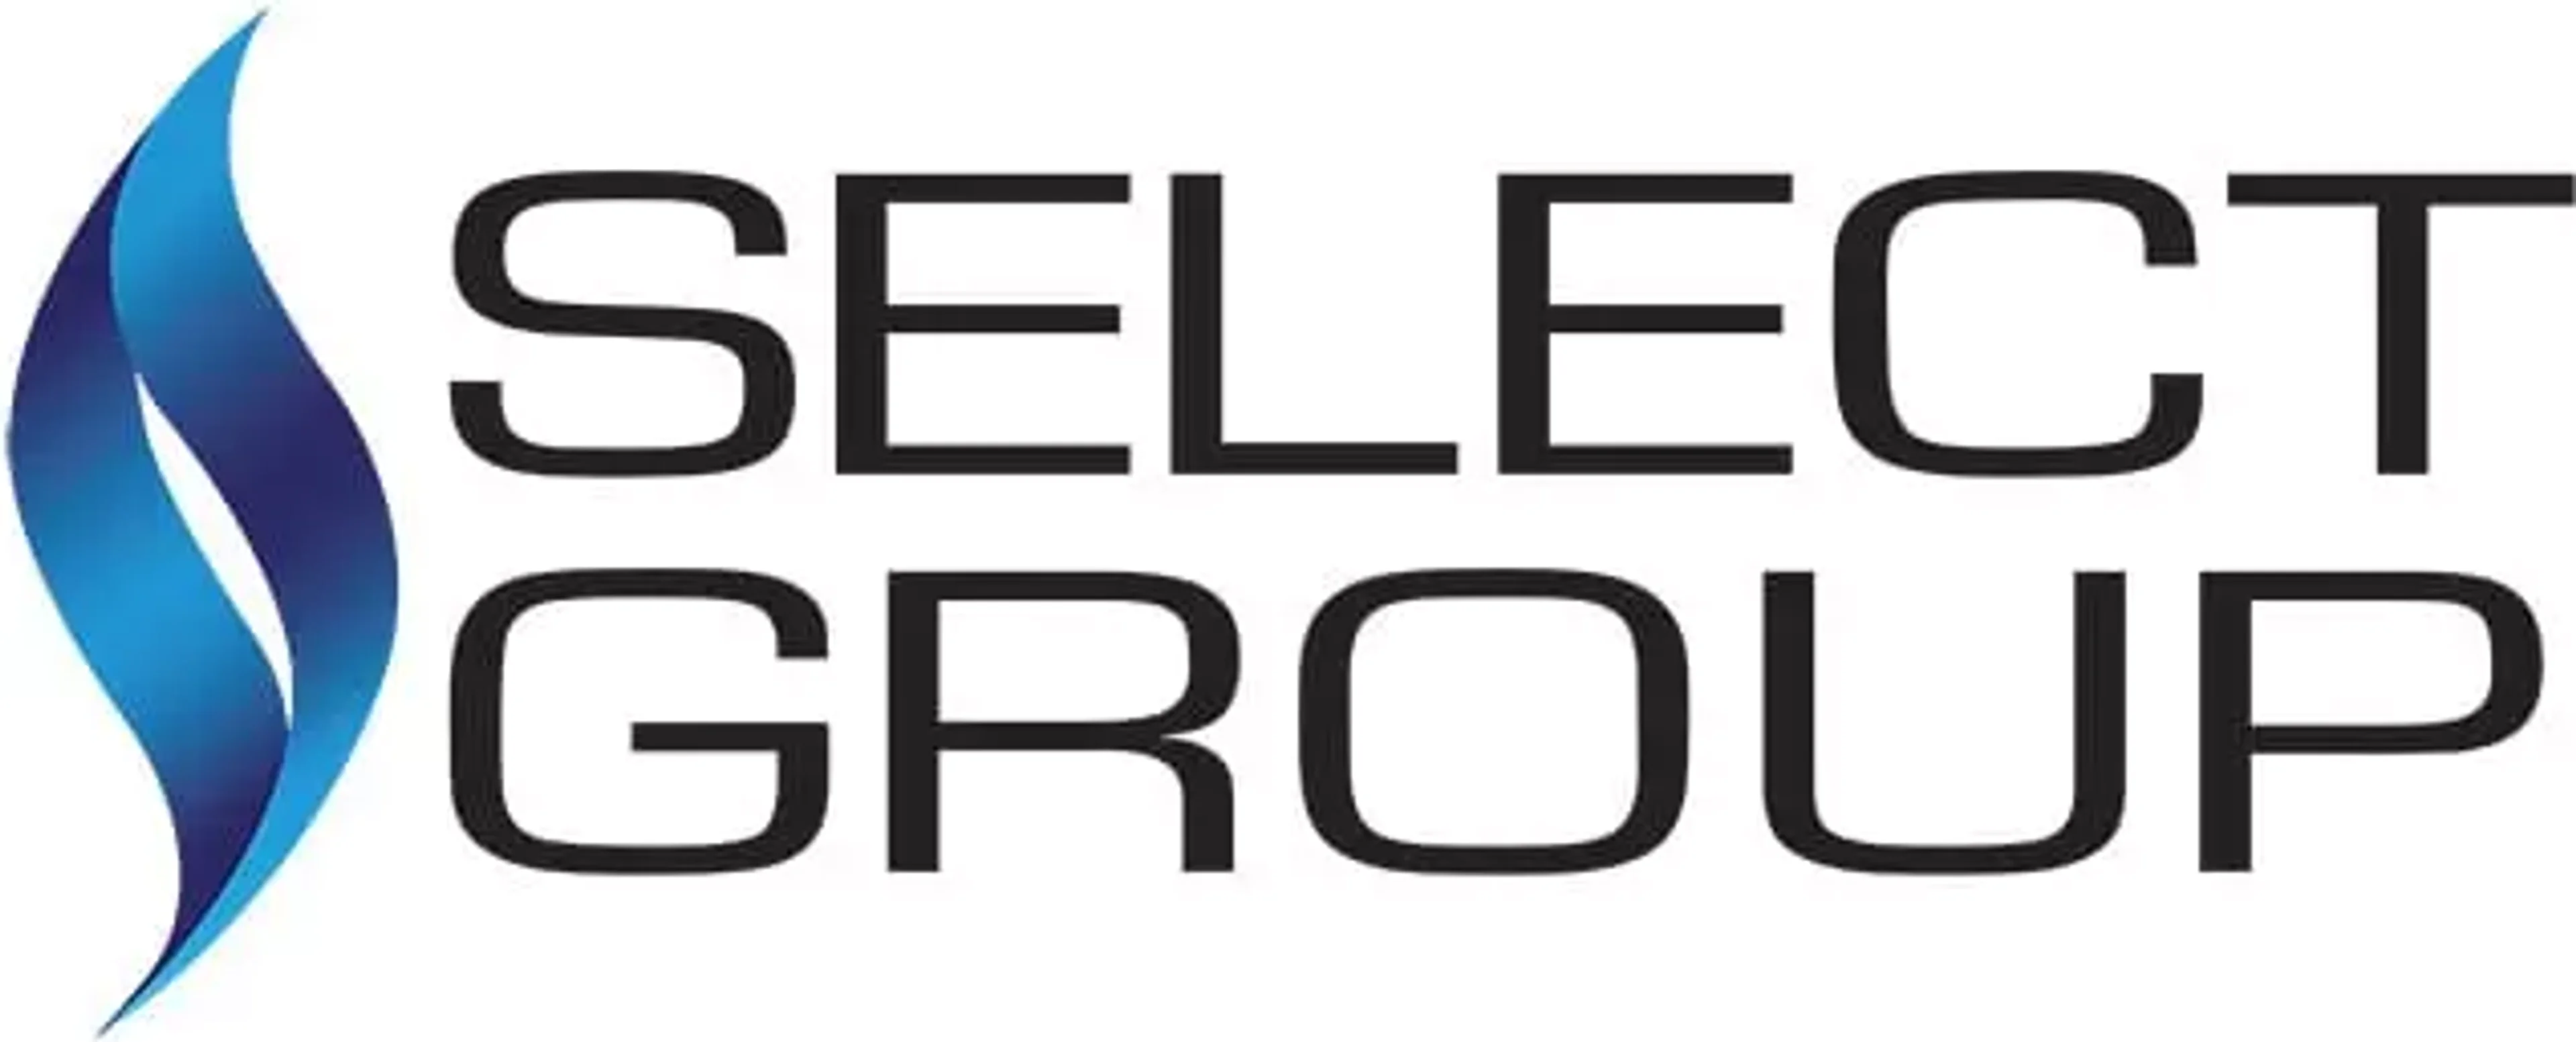 Logo of the real estate developer "Select"